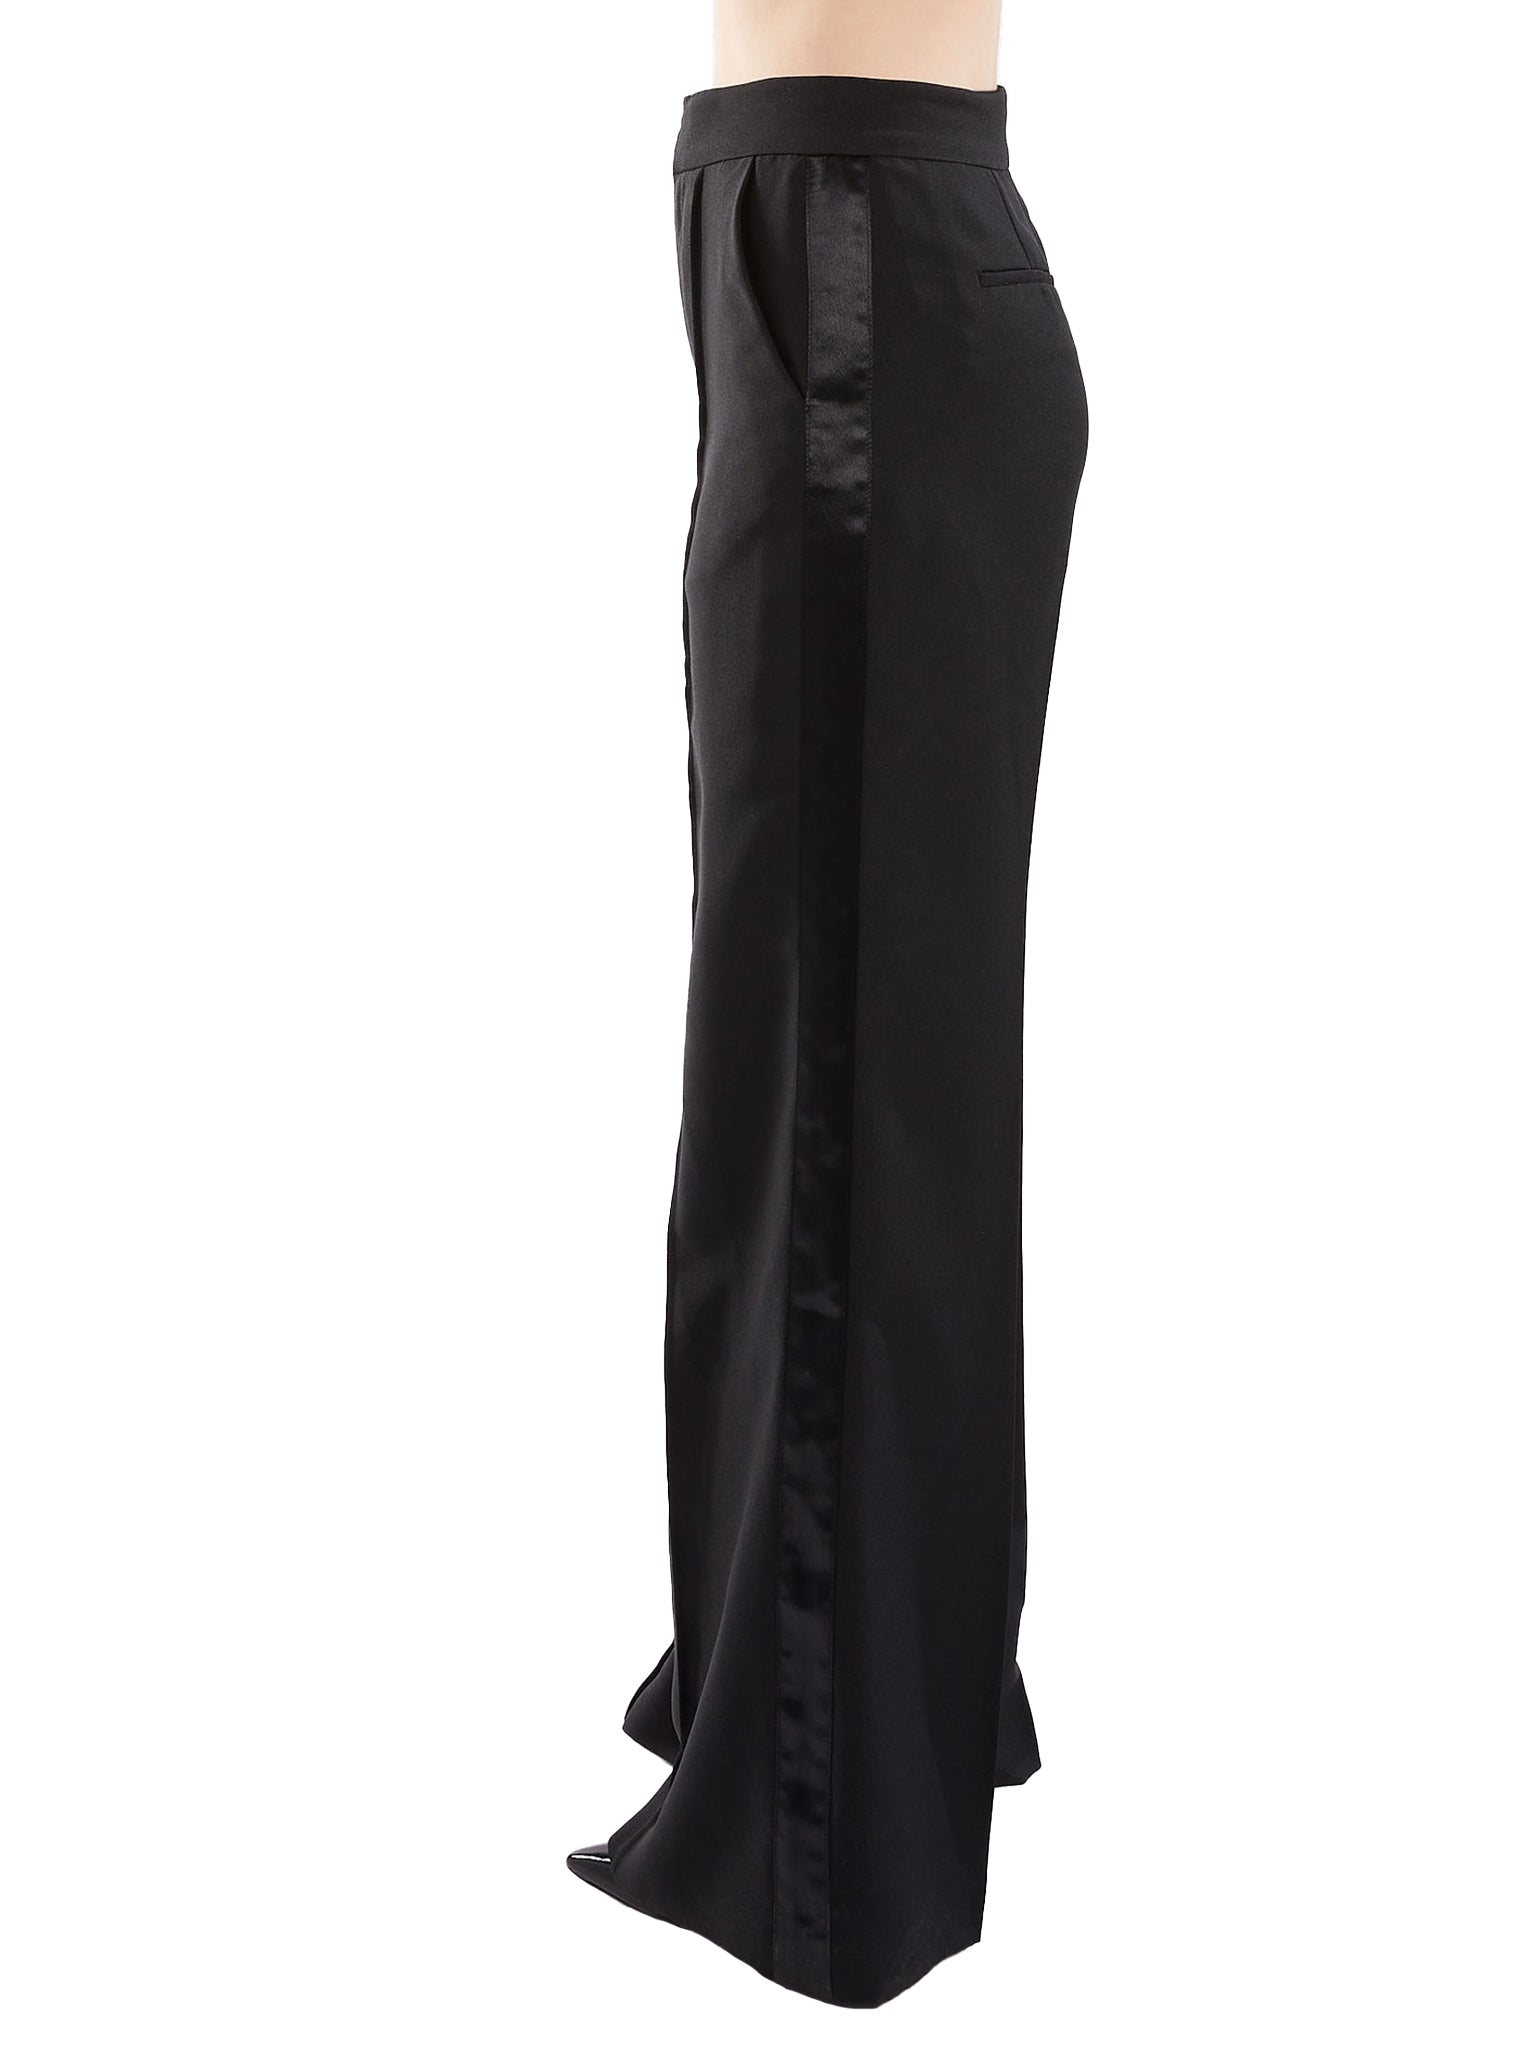 Dress Pants Culotte High Waist Trousers Womens Baggy Plus Size Wide Leg  Palazzo | eBay